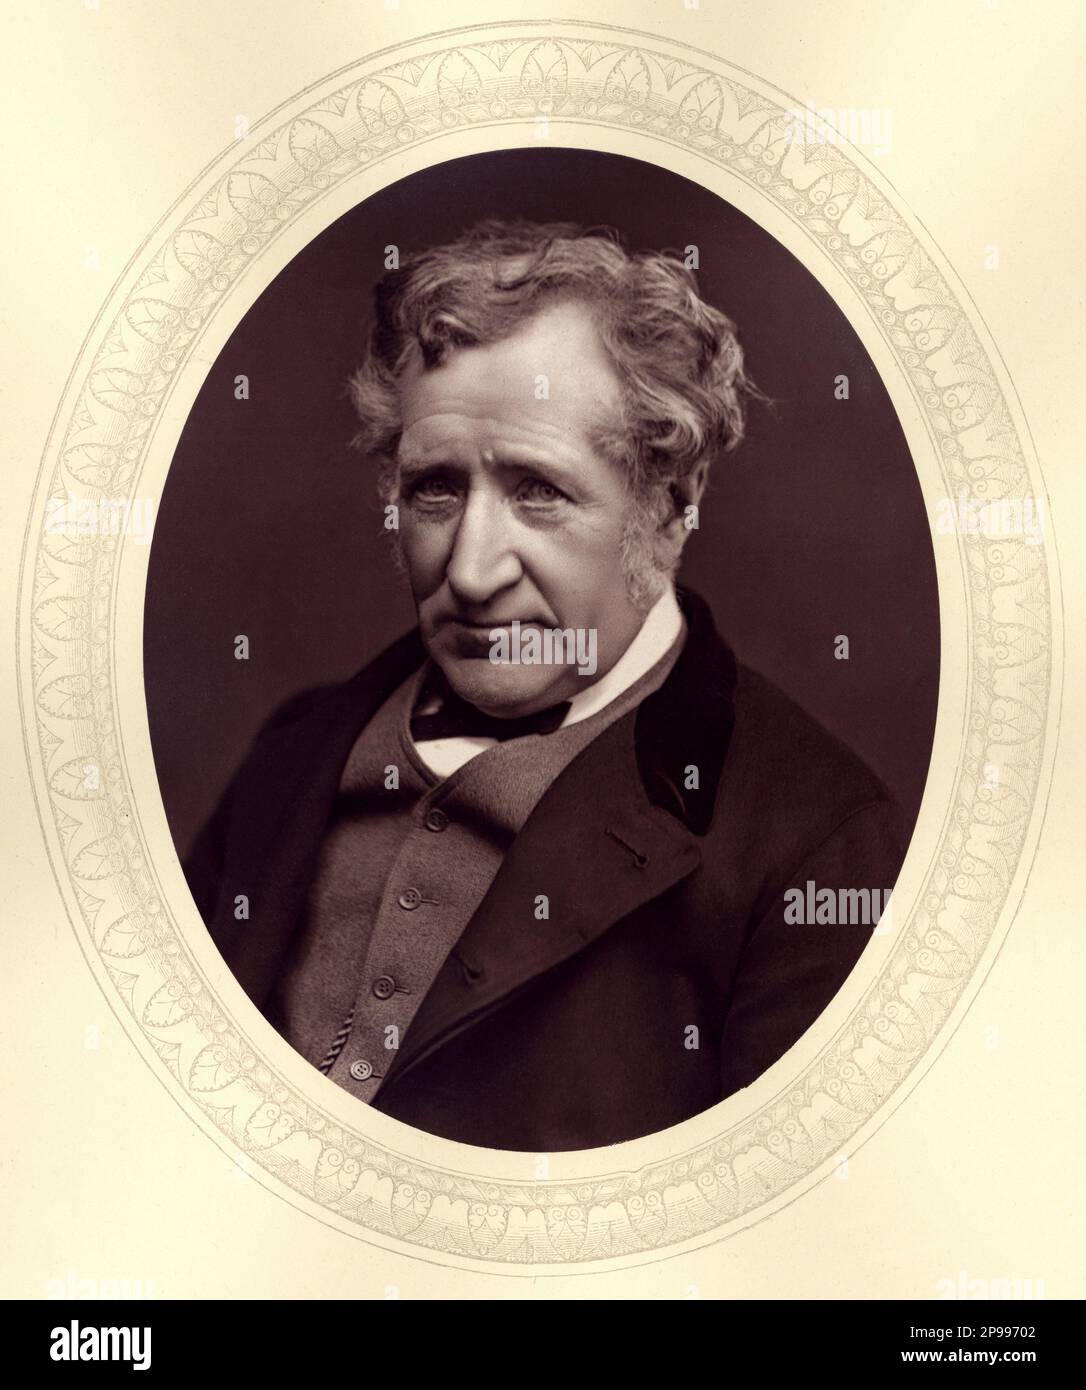 The scottish  inventor and engineer  JAMES HALL NASMYTH ( 1808 - 1890 ), famous for his development of the steam hammer  - Nasmith - foto storiche - foto storica  - INGENIERE - INGENIERIA   - portrait - ritratto  - SCOZIA - SCHOTLAND - tie - cravatta - basette - uomo anziano vecchio - older man  - INVENTORE - GREAT BRITAIN  ----   Archivio GBB Stock Photo